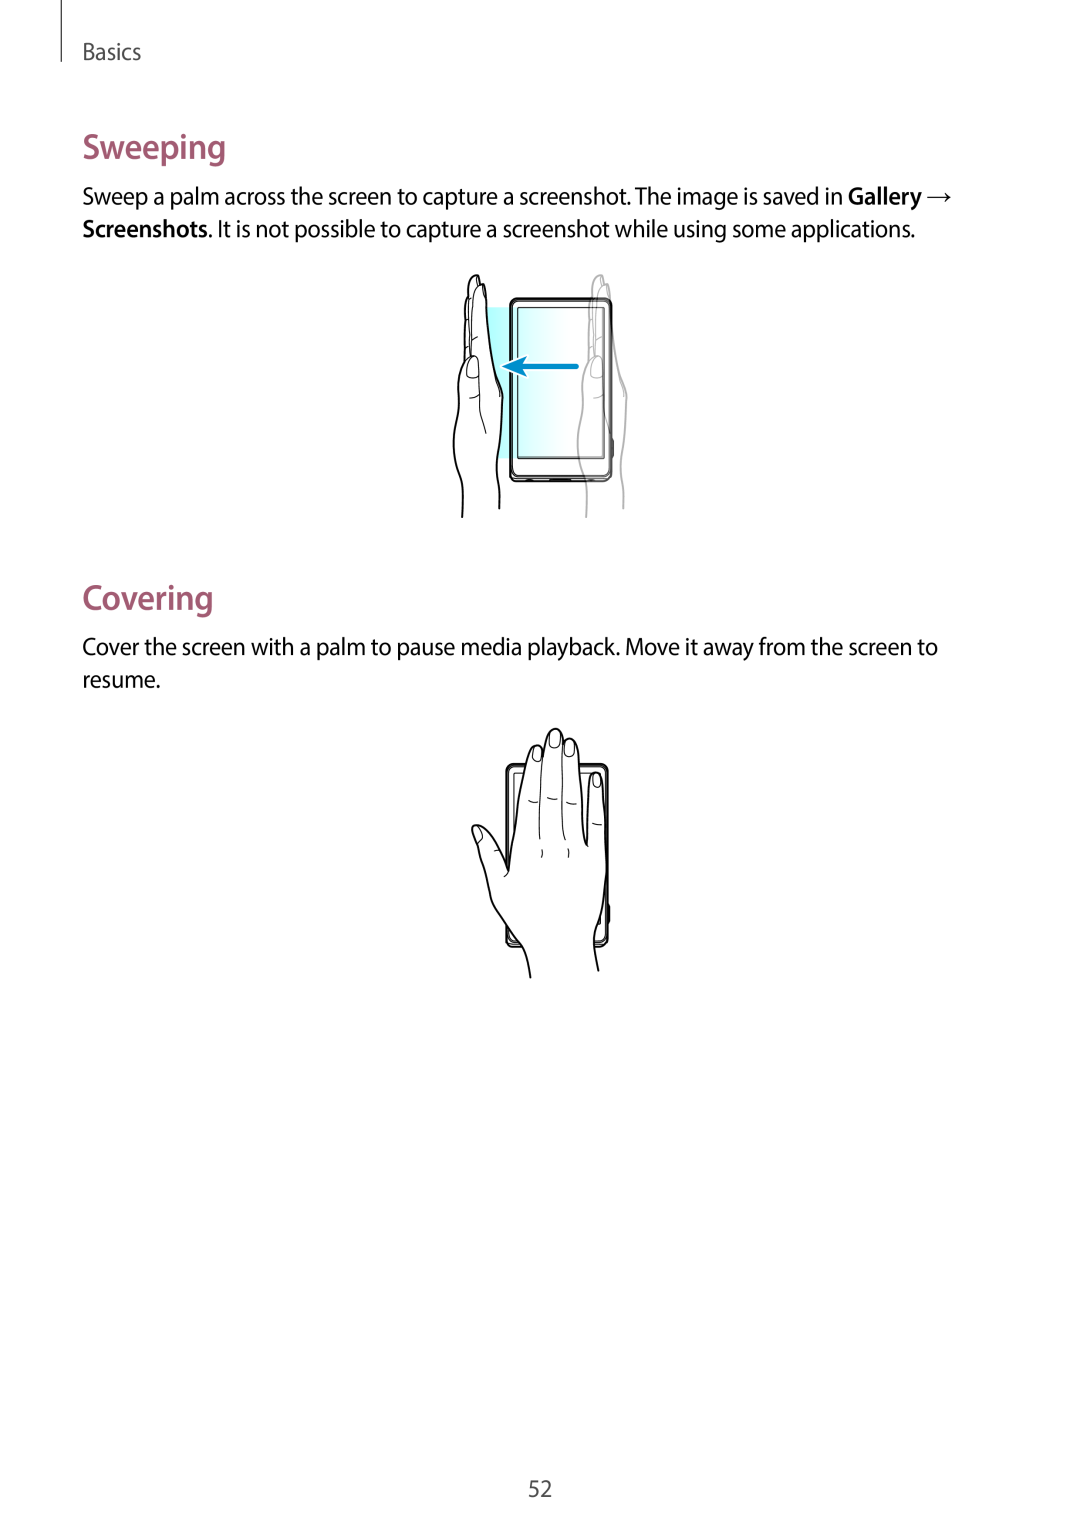 Samsung EK-GC100 user manual Sweeping, Covering, Basics 